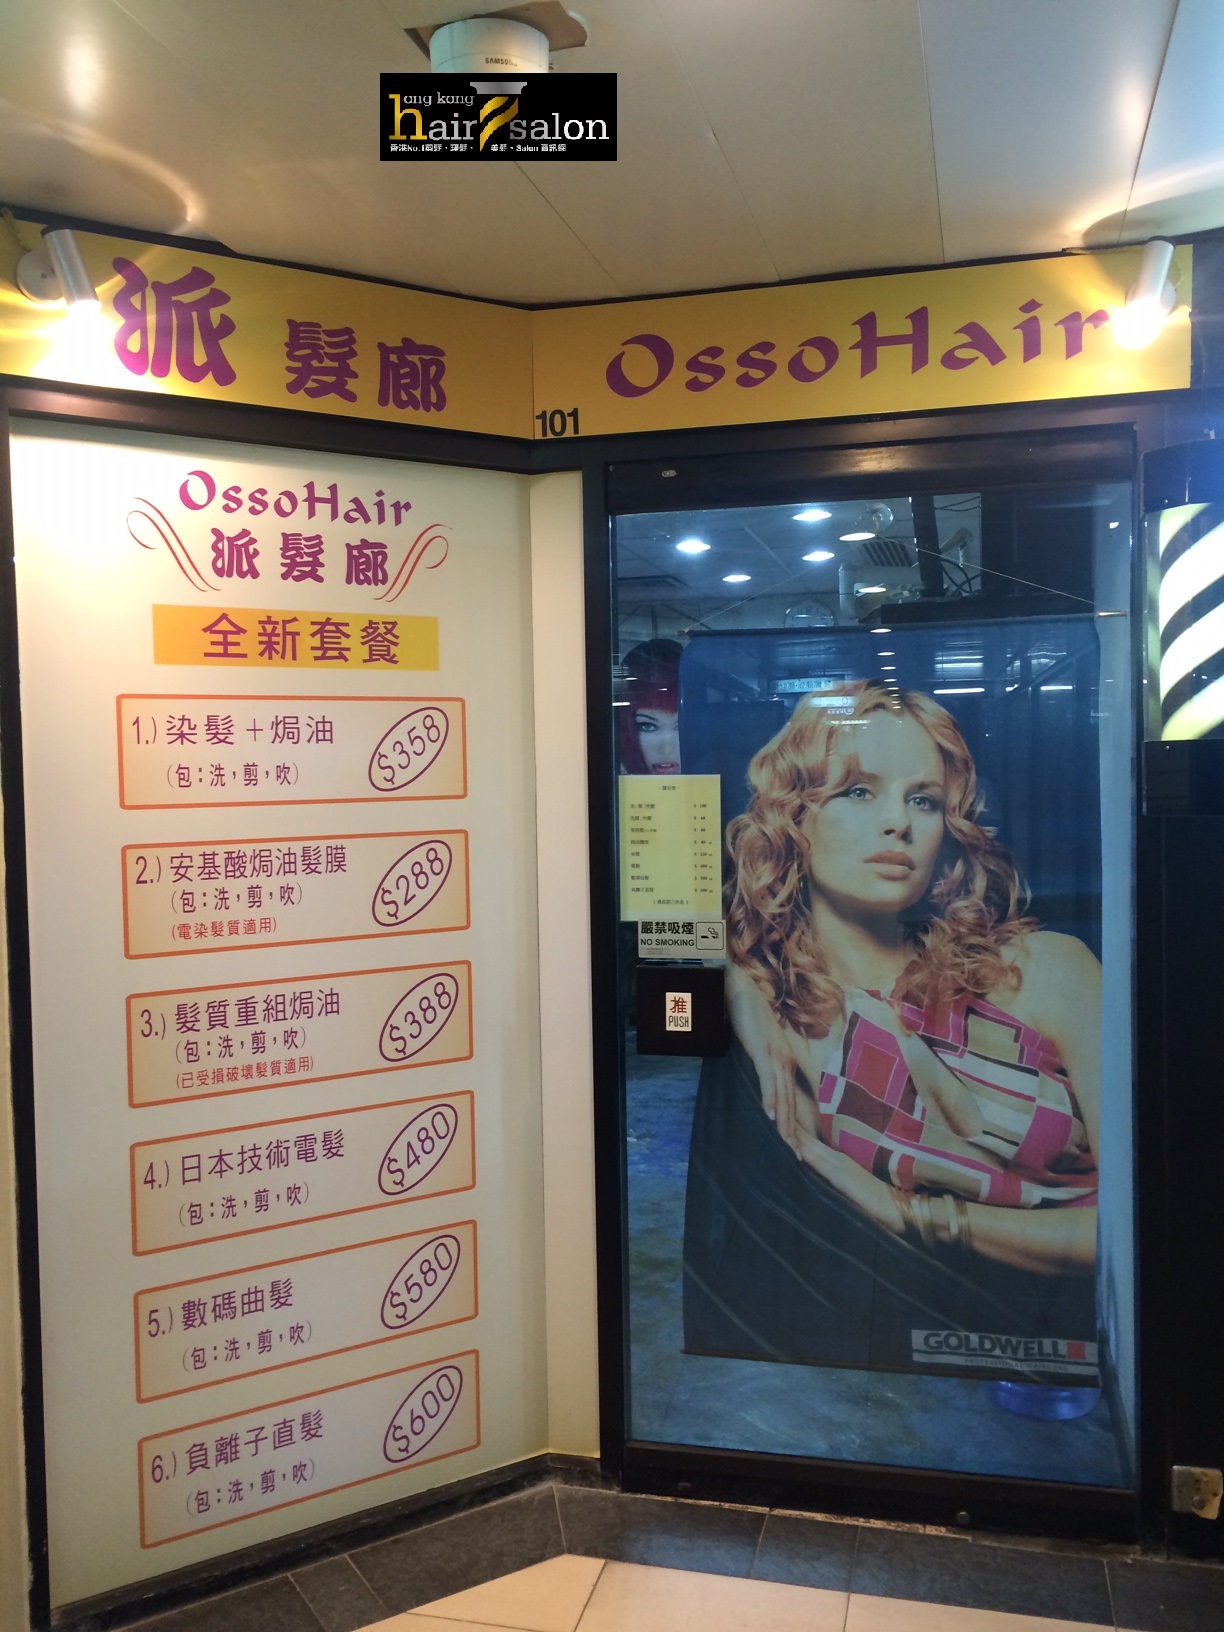 Hair Colouring: Osso Hair 派髮廊